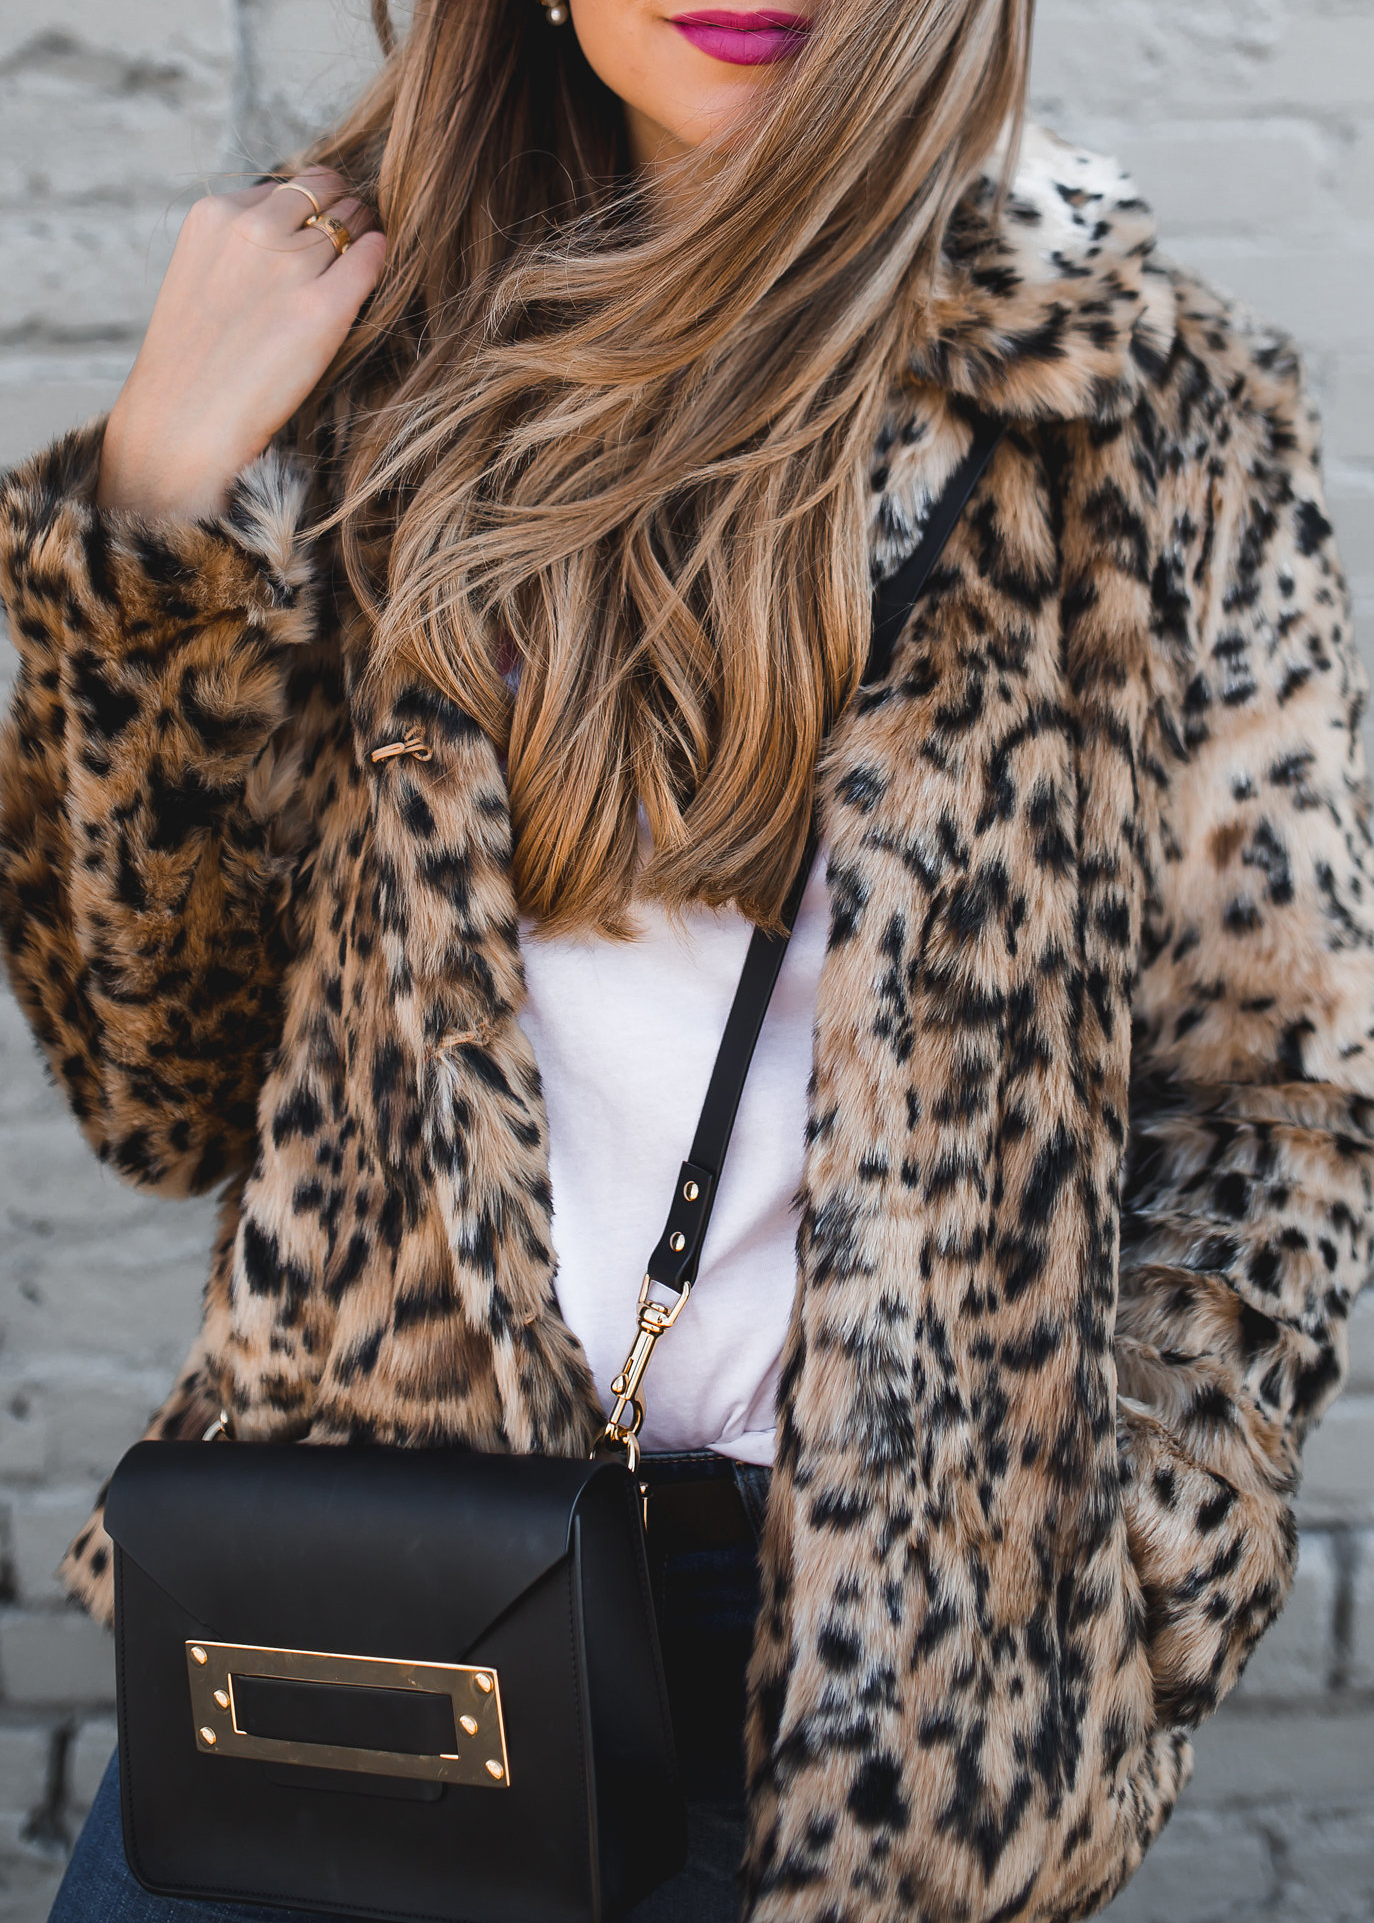 The Leopard Coat | The Teacher Diva: a Dallas Fashion Blog featuring ...